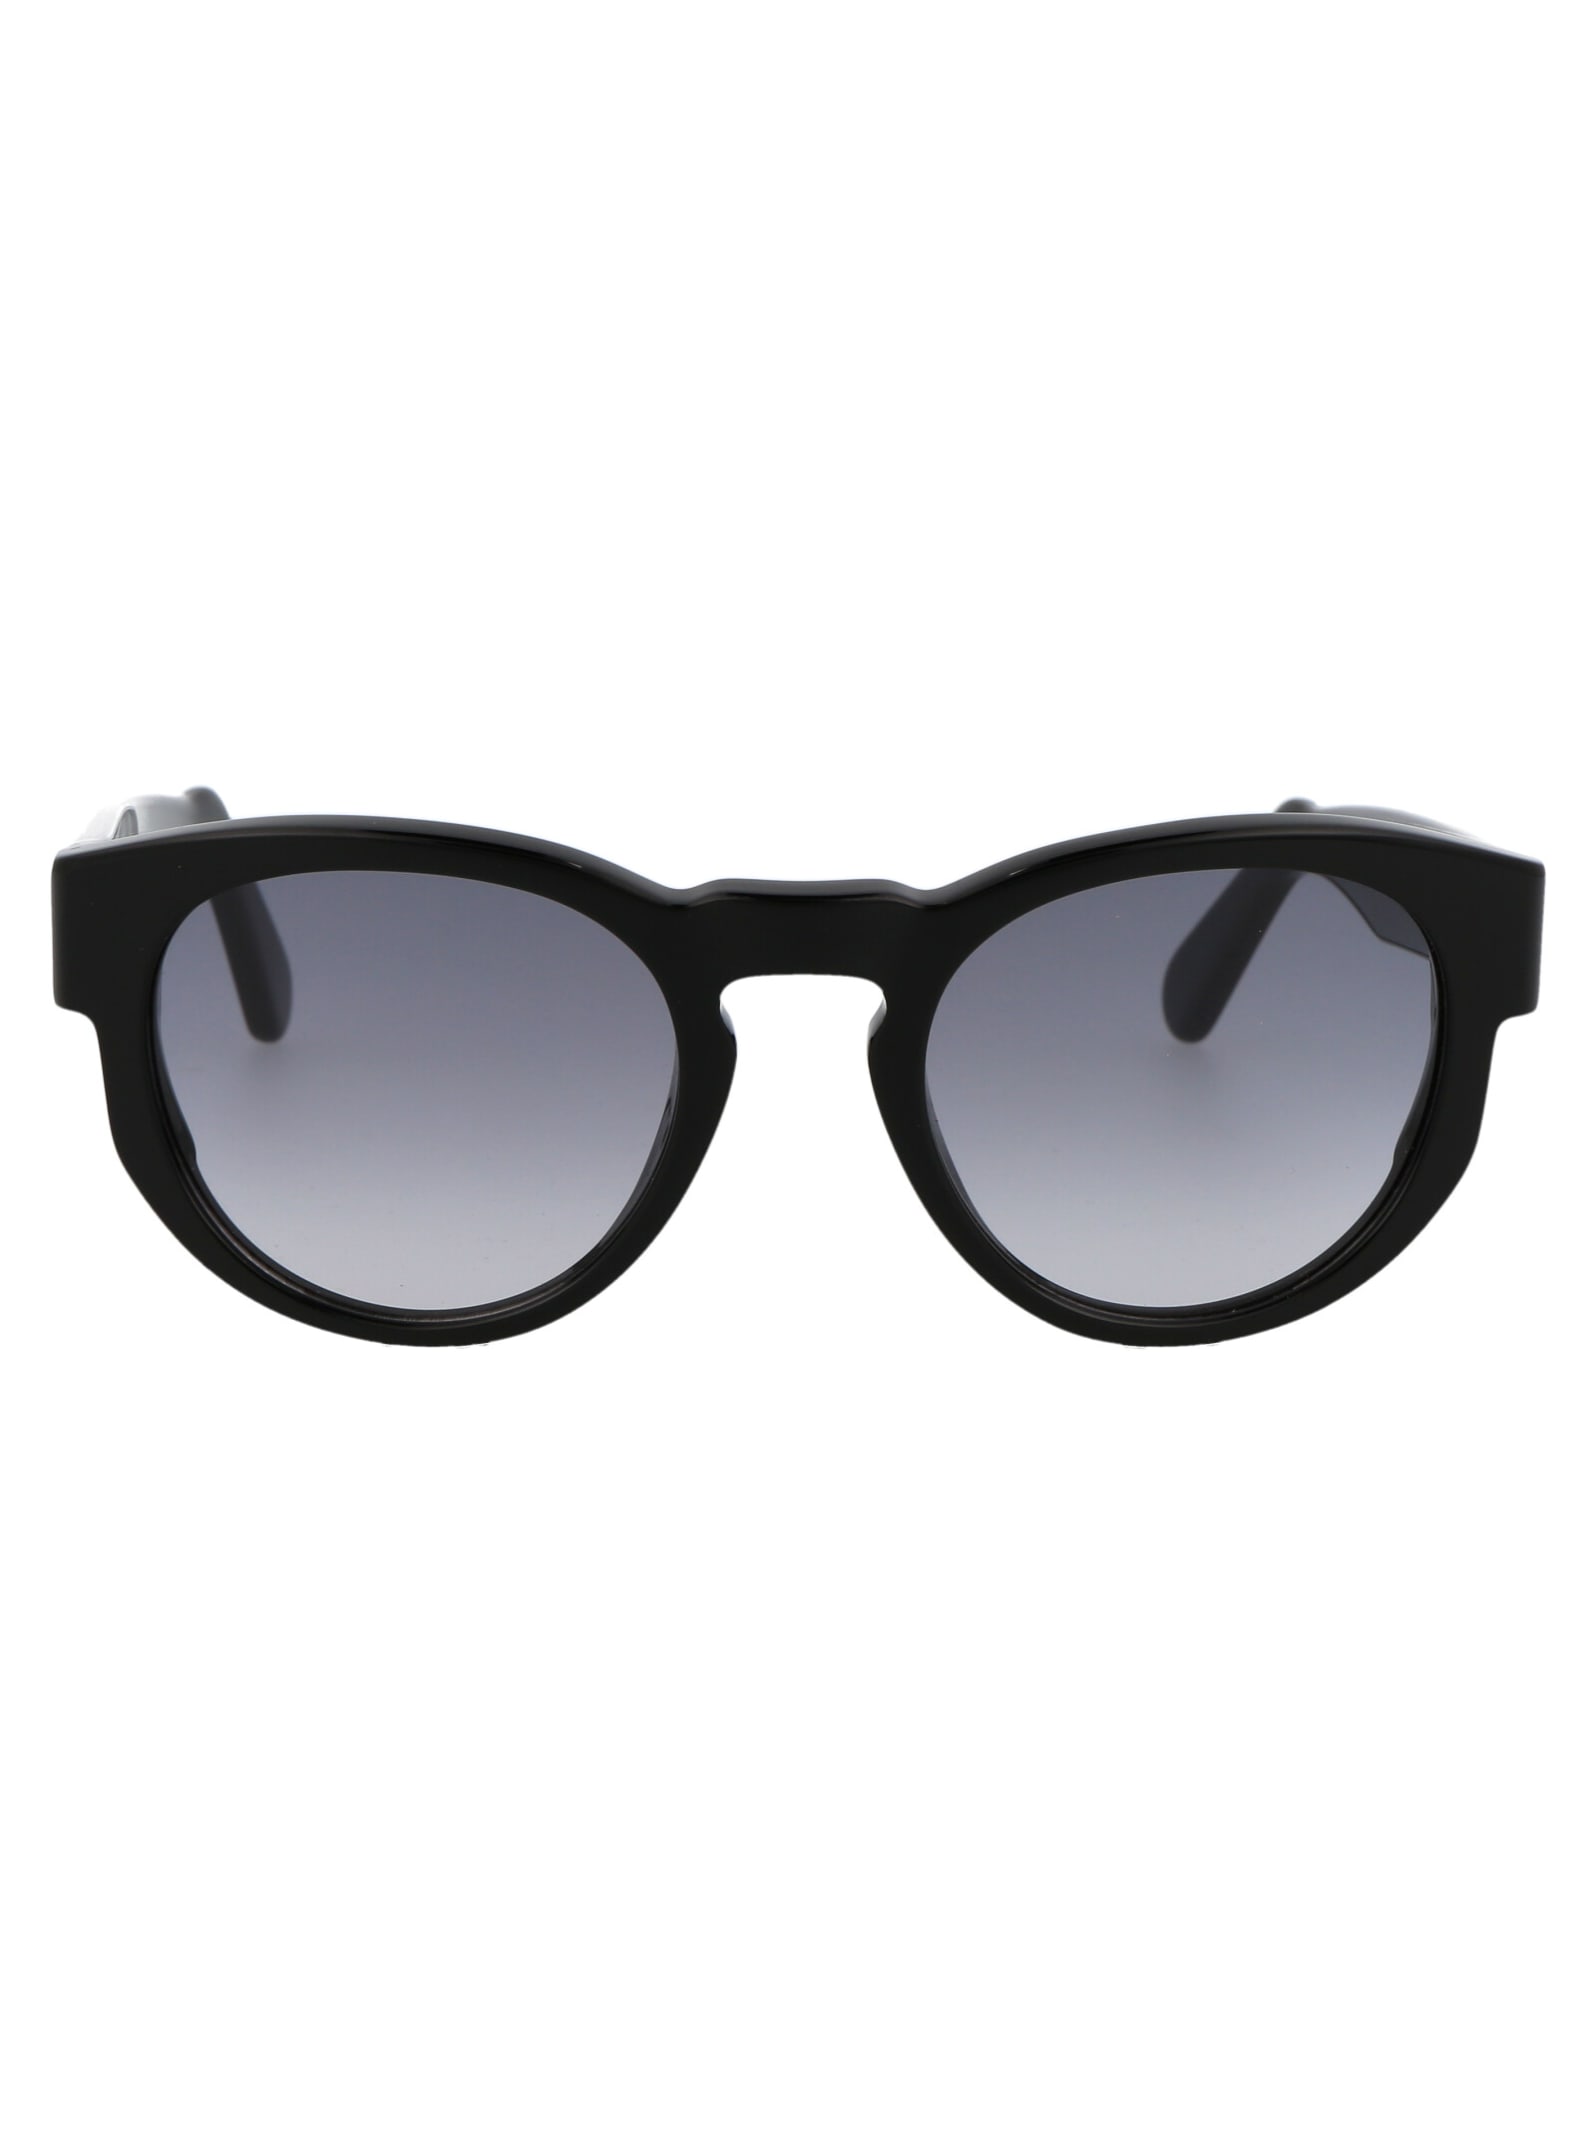 Gd0011 Sunglasses